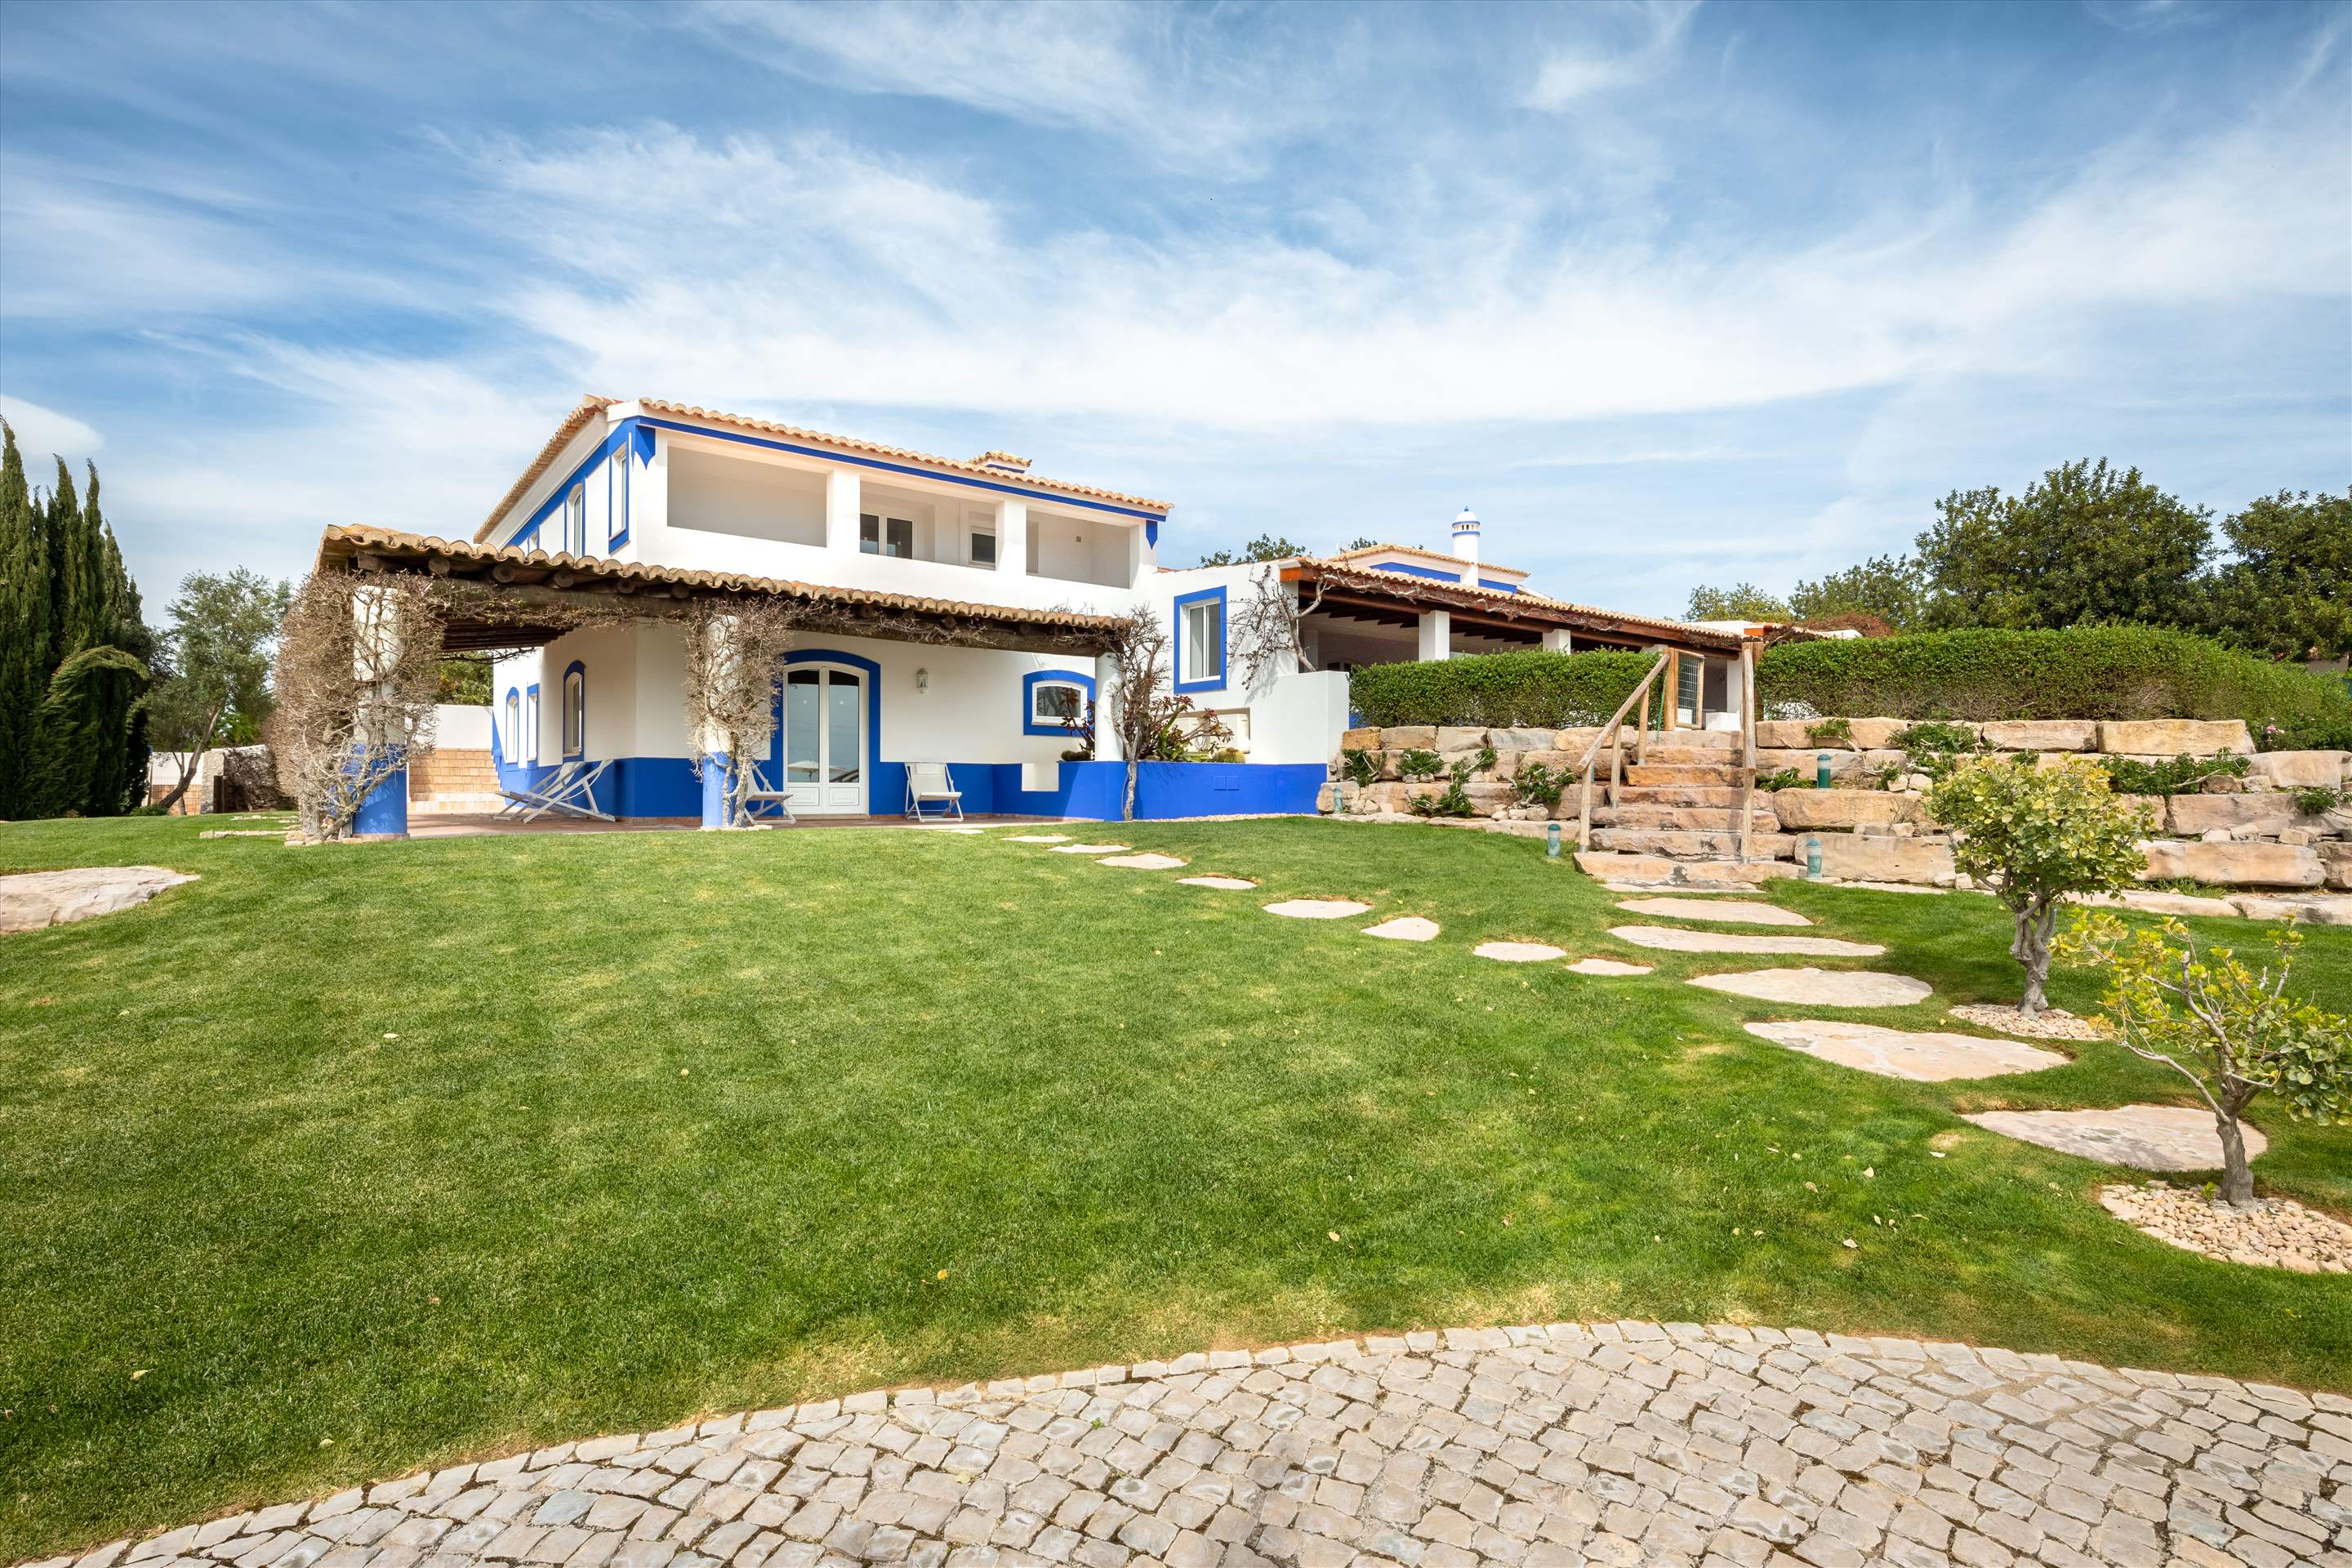 Casa da Montanha, 11-12 persons, 7 bedroom villa in Vilamoura Area, Algarve Photo #5